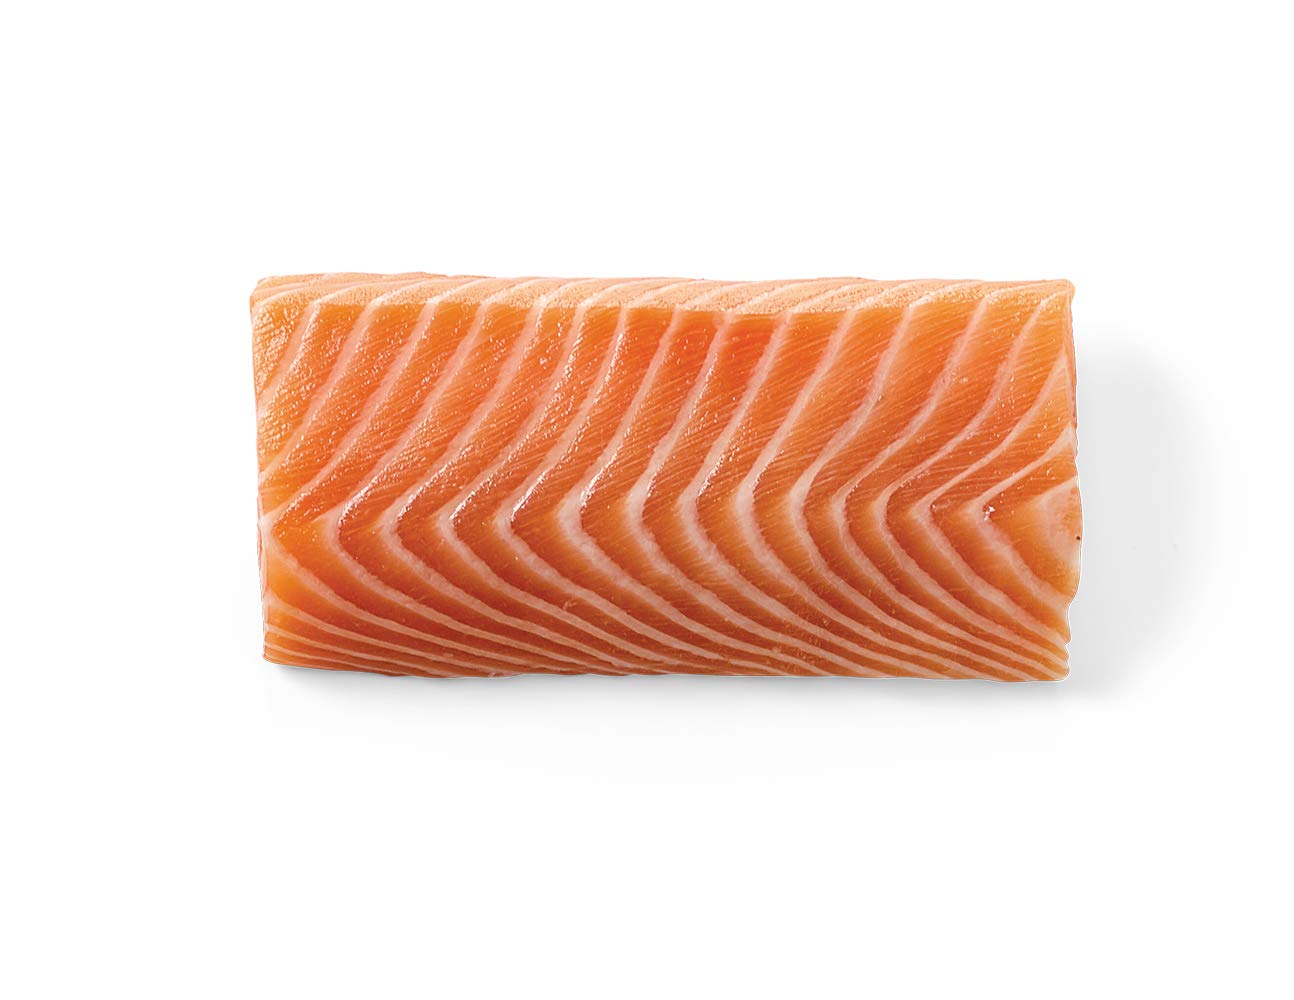 Lachs-Rückenfilet roh (Sashimi-Qualität)